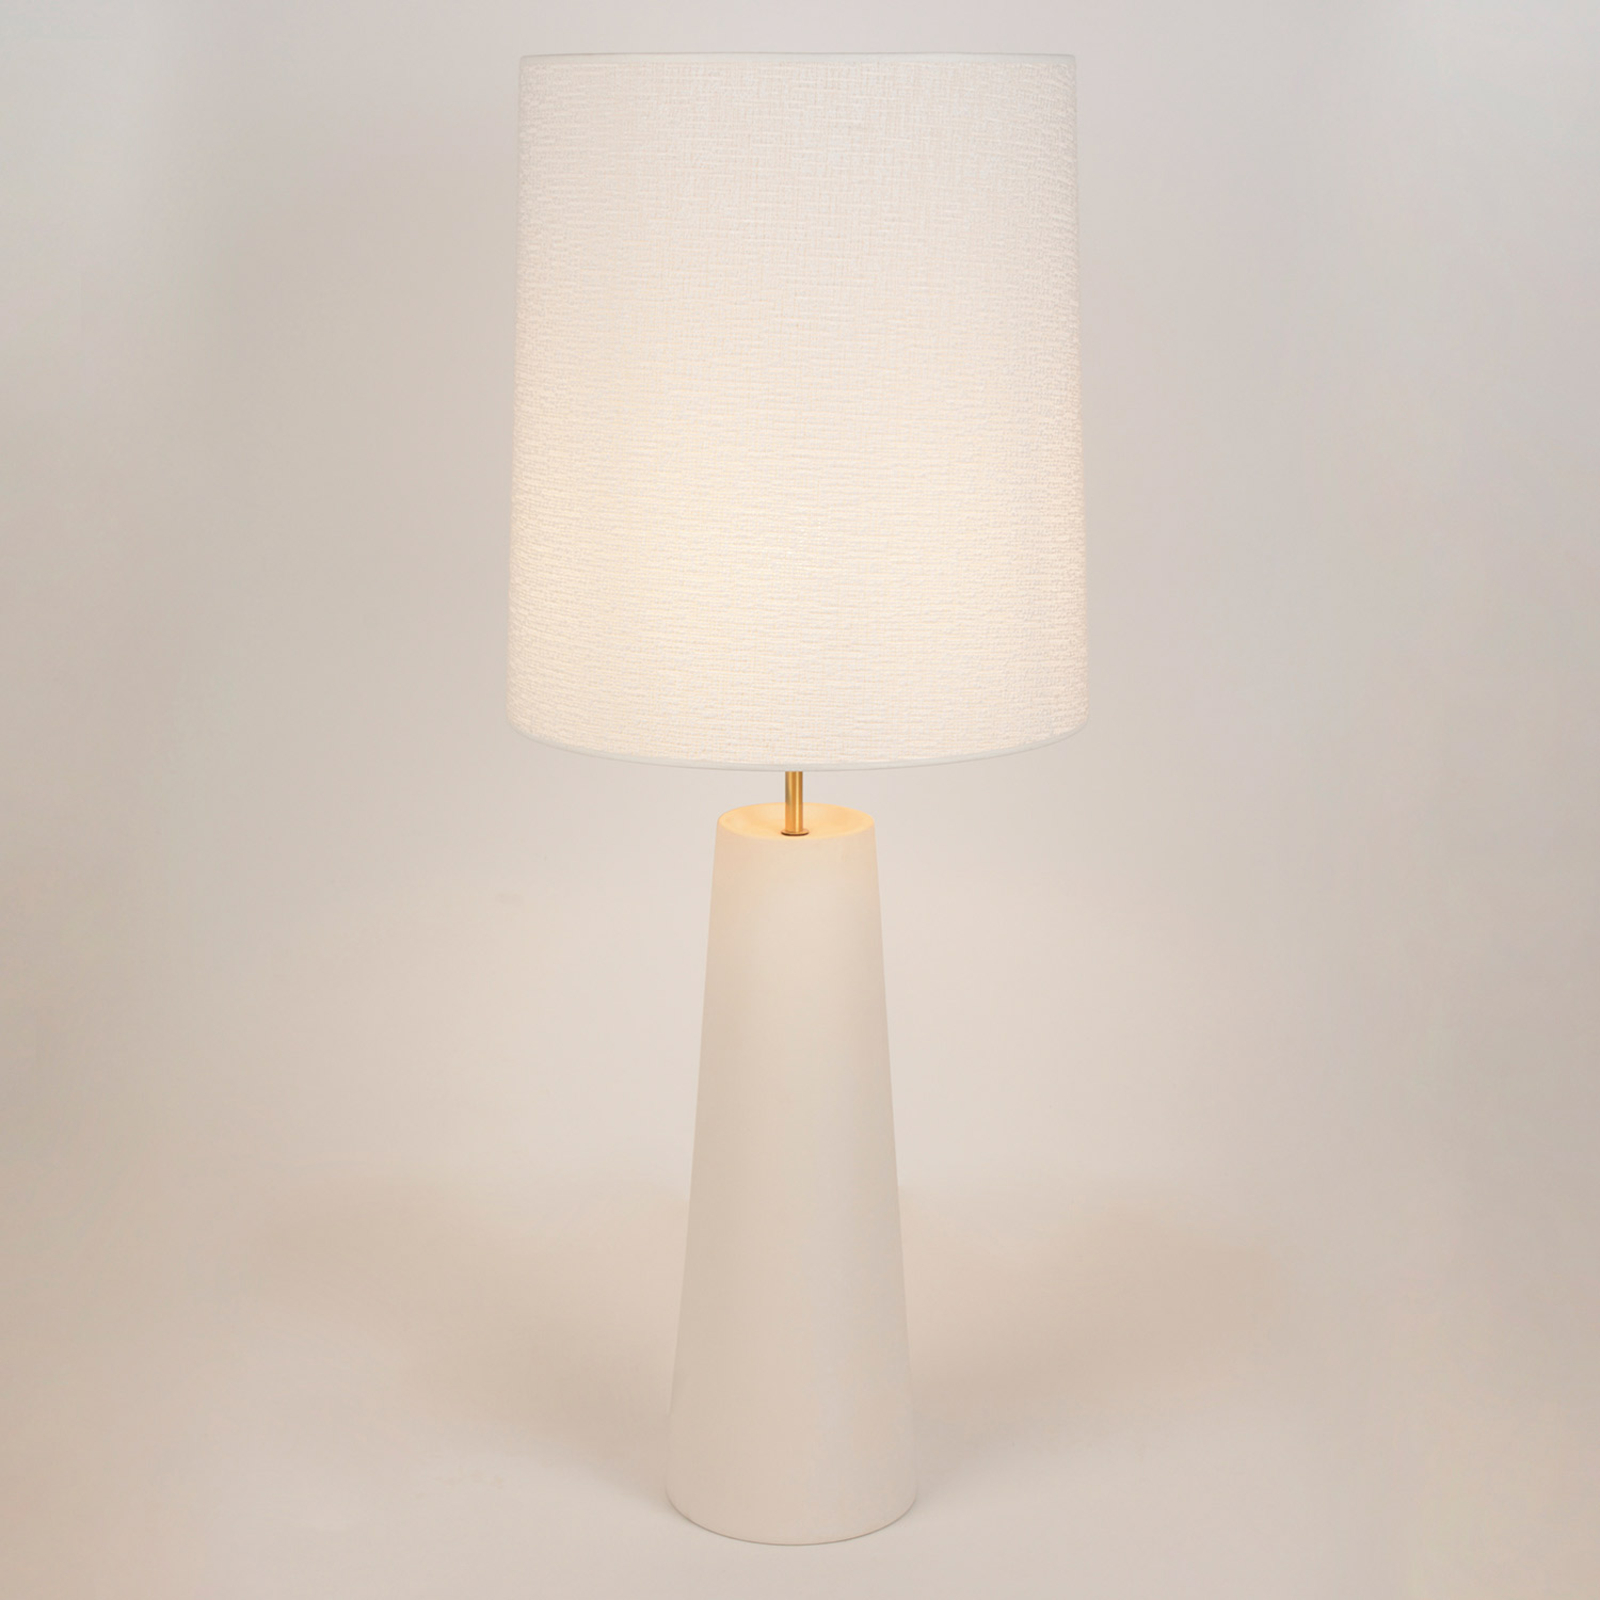 MARKET SET Cosiness table lamp, ceramic base white